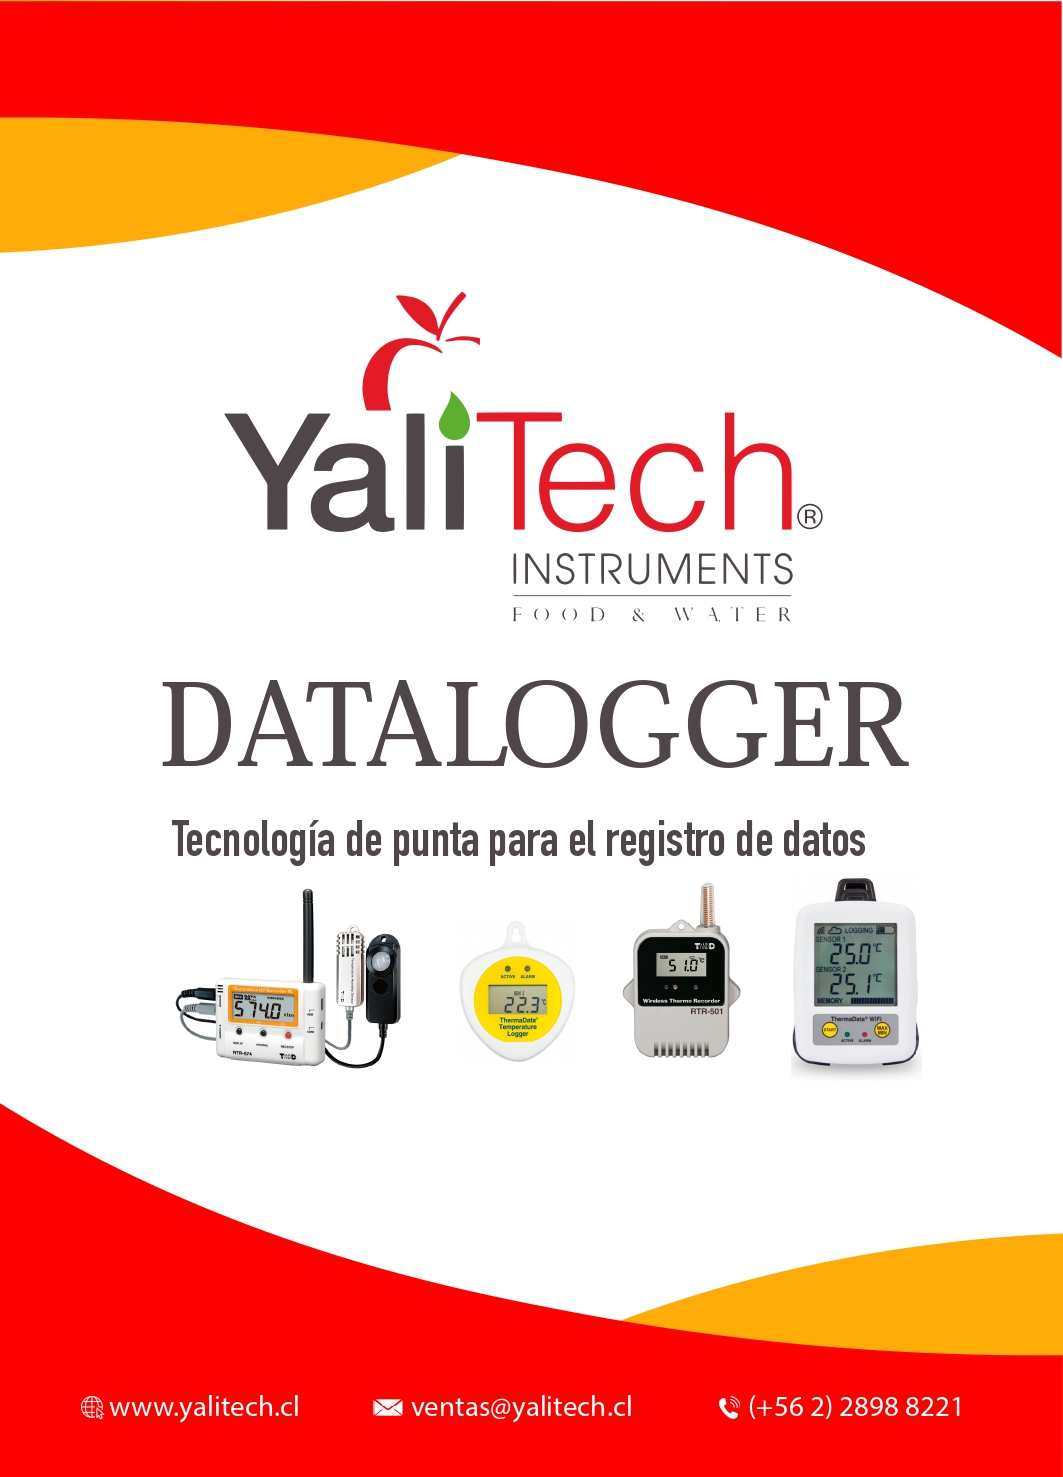 https://yalitech.cl/media/files/catalogs/images/Catalago_DataLogger_YaliTech.jpg